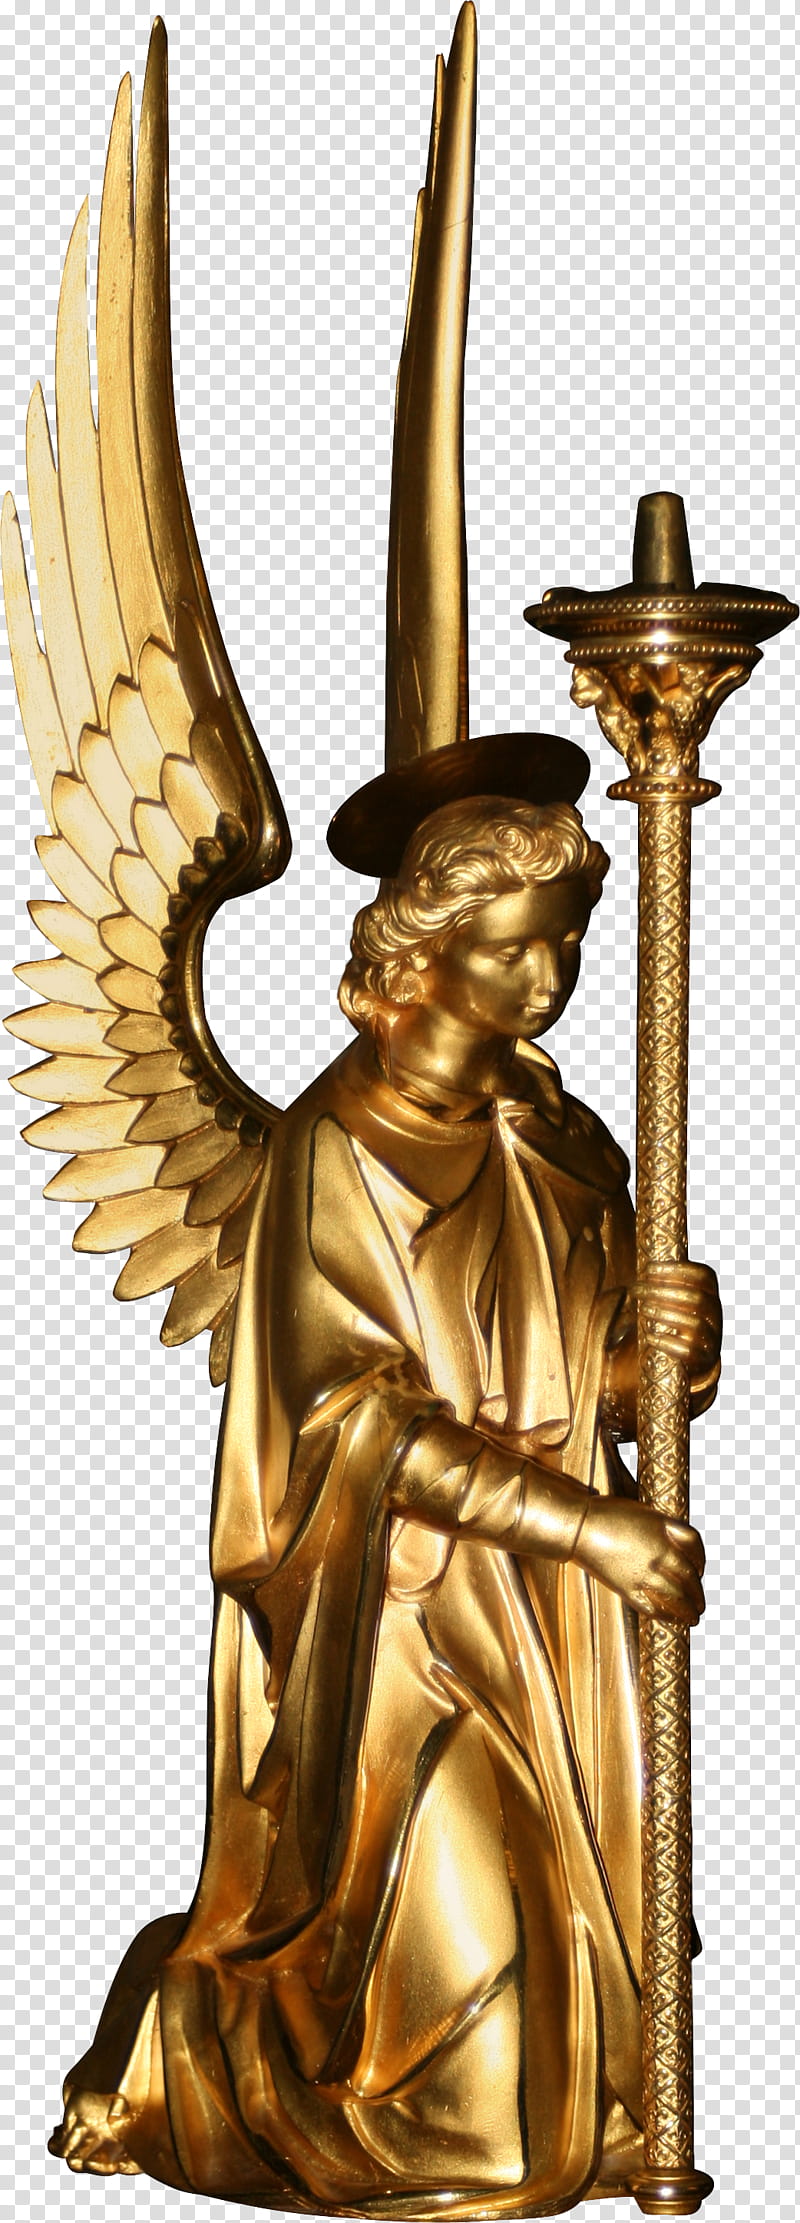 golden angel candleholder precut, winged woman figurine transparent background PNG clipart